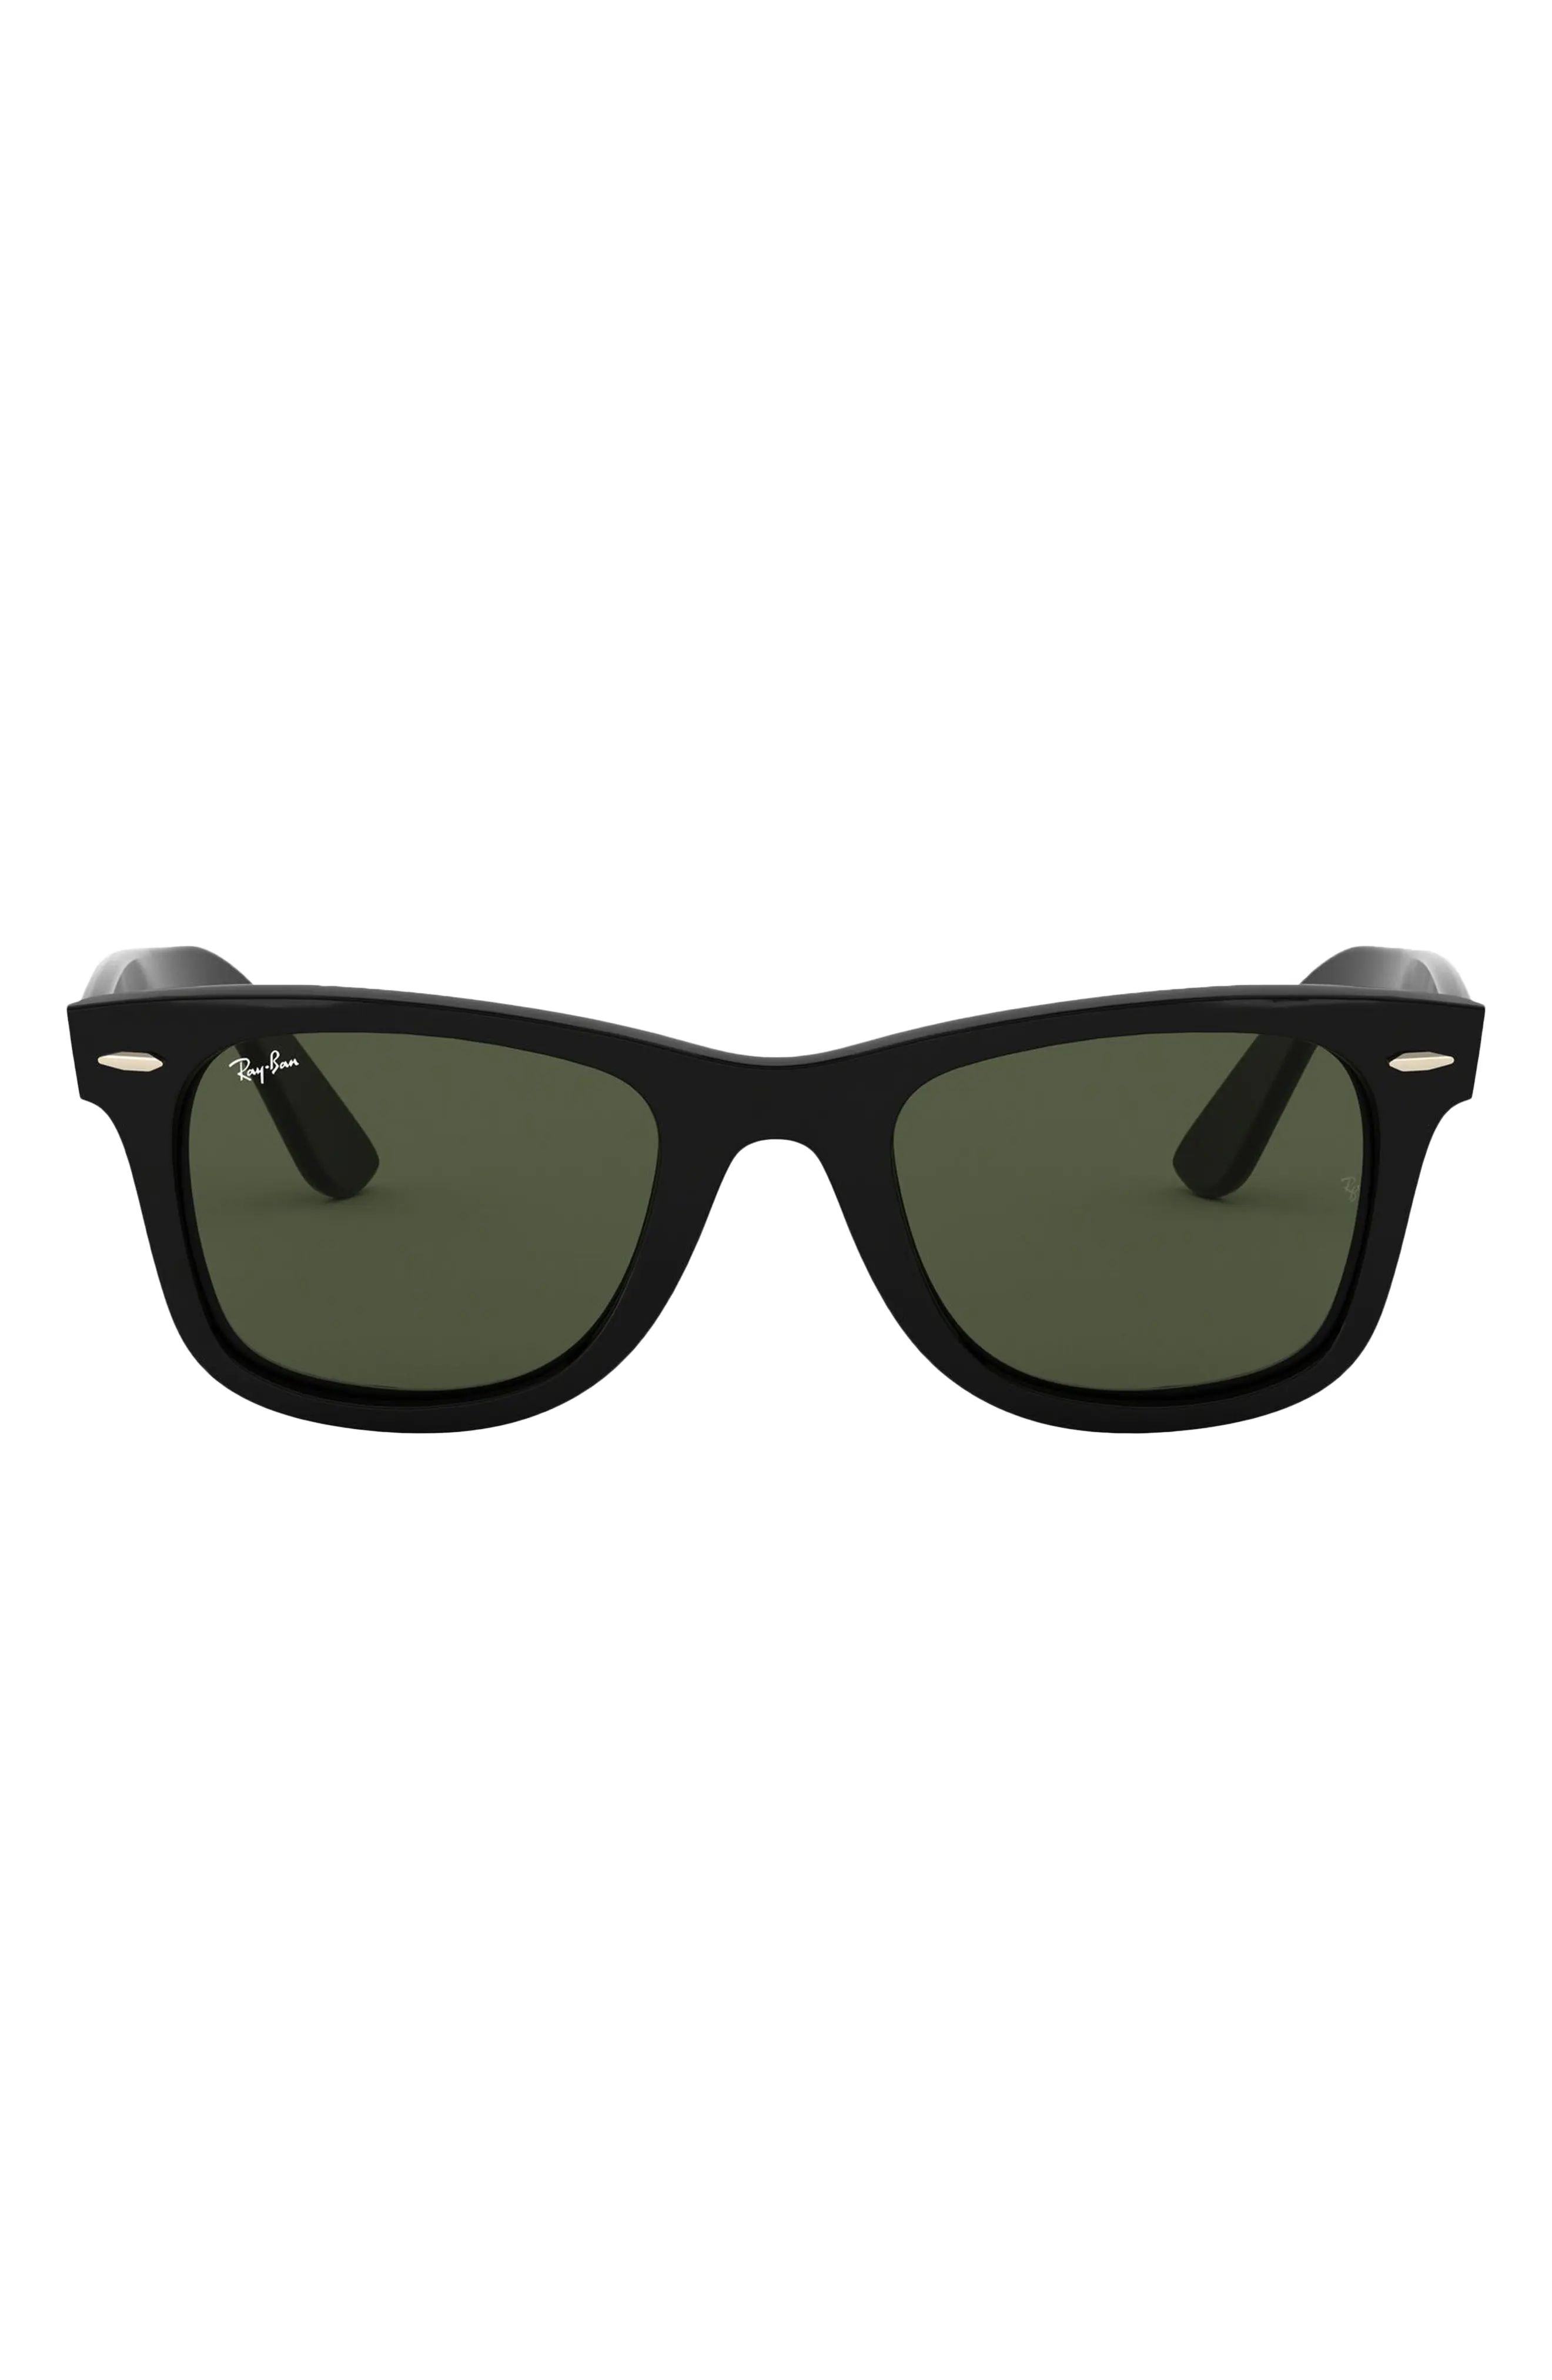 Women's Ray-Ban Wayfarer Ease 50mm Sunglasses - Black/ Green | Nordstrom